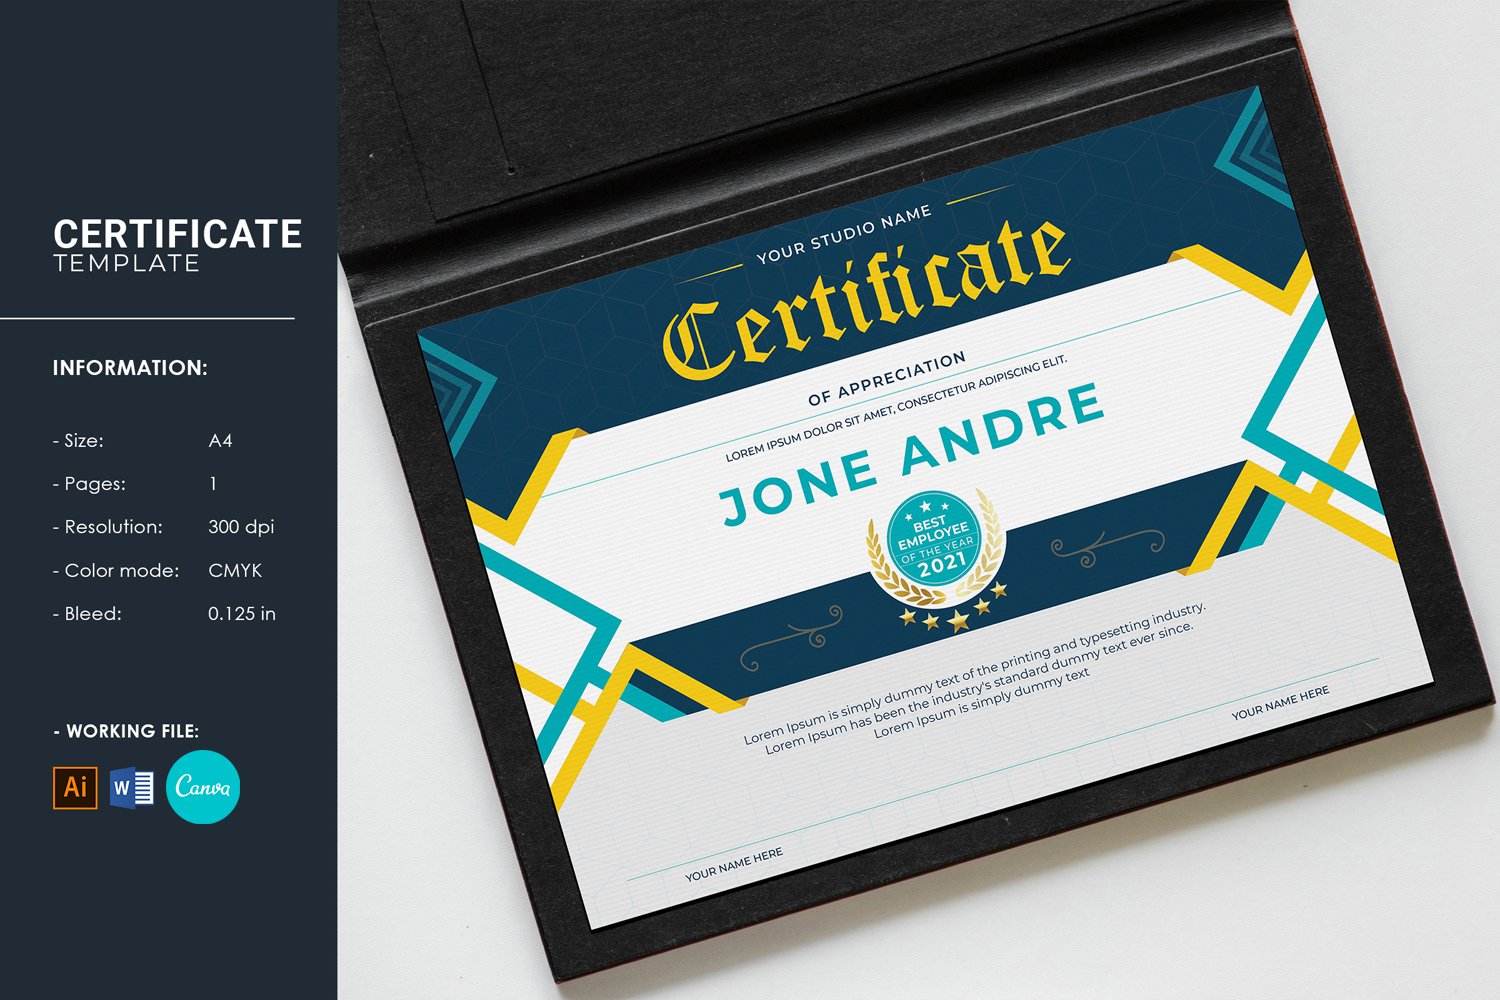 Template #255937 Certificate Appreciation Webdesign Template - Logo template Preview